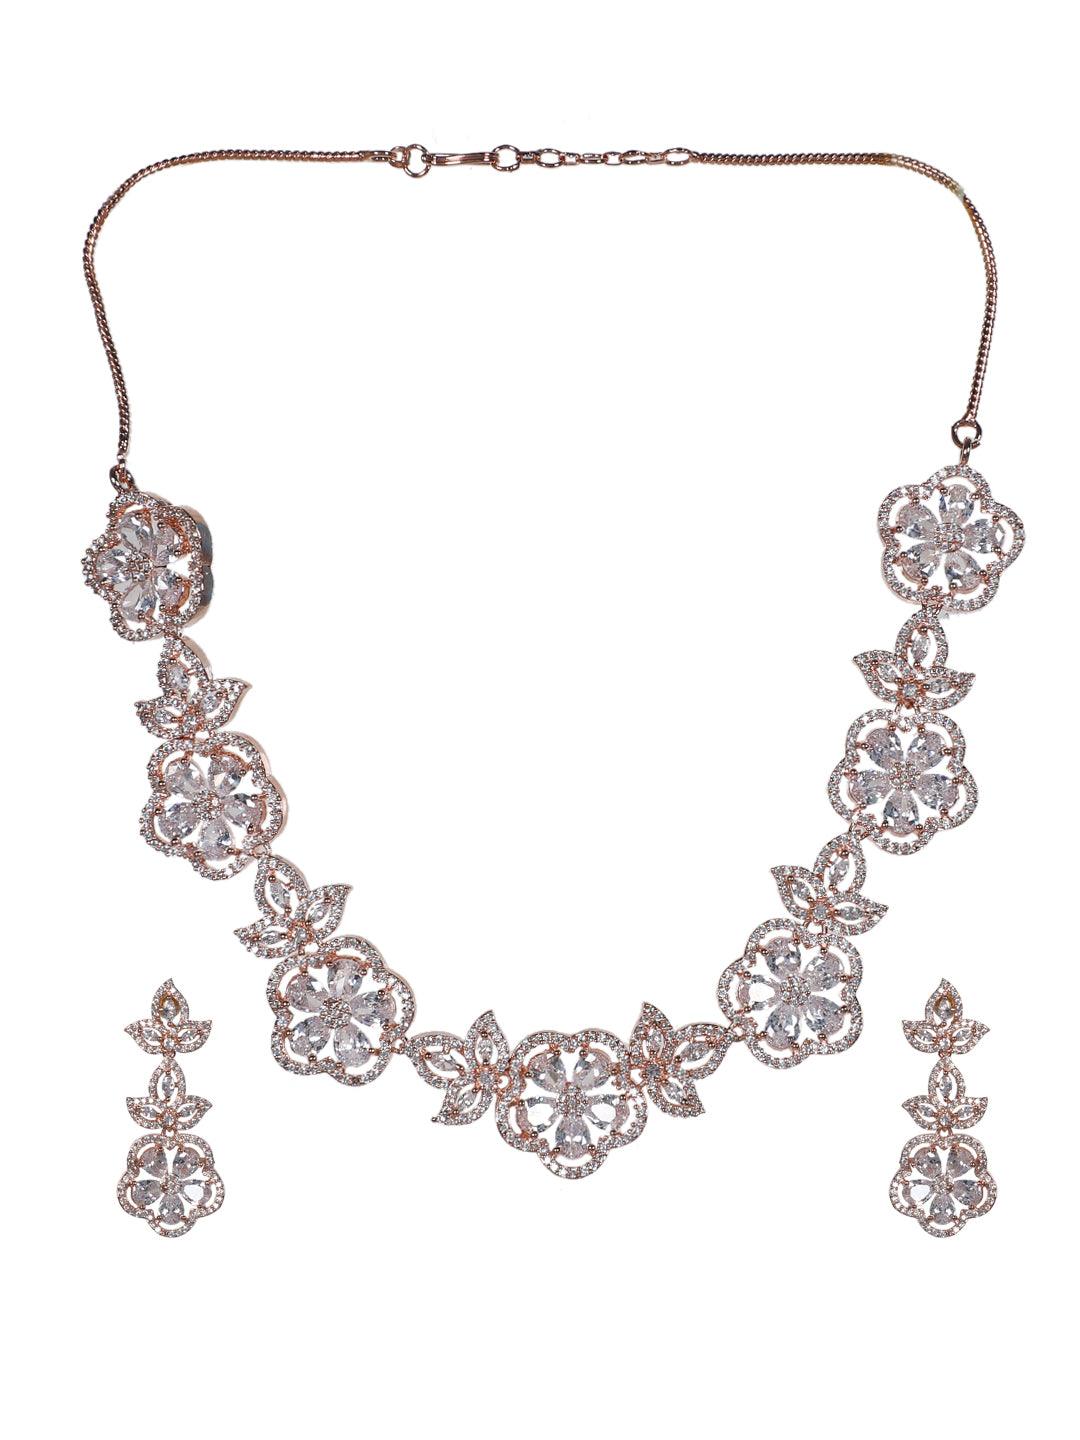 American Diamond Golden Flower Designer Stone Choker Necklace Set - Steorra Jewels